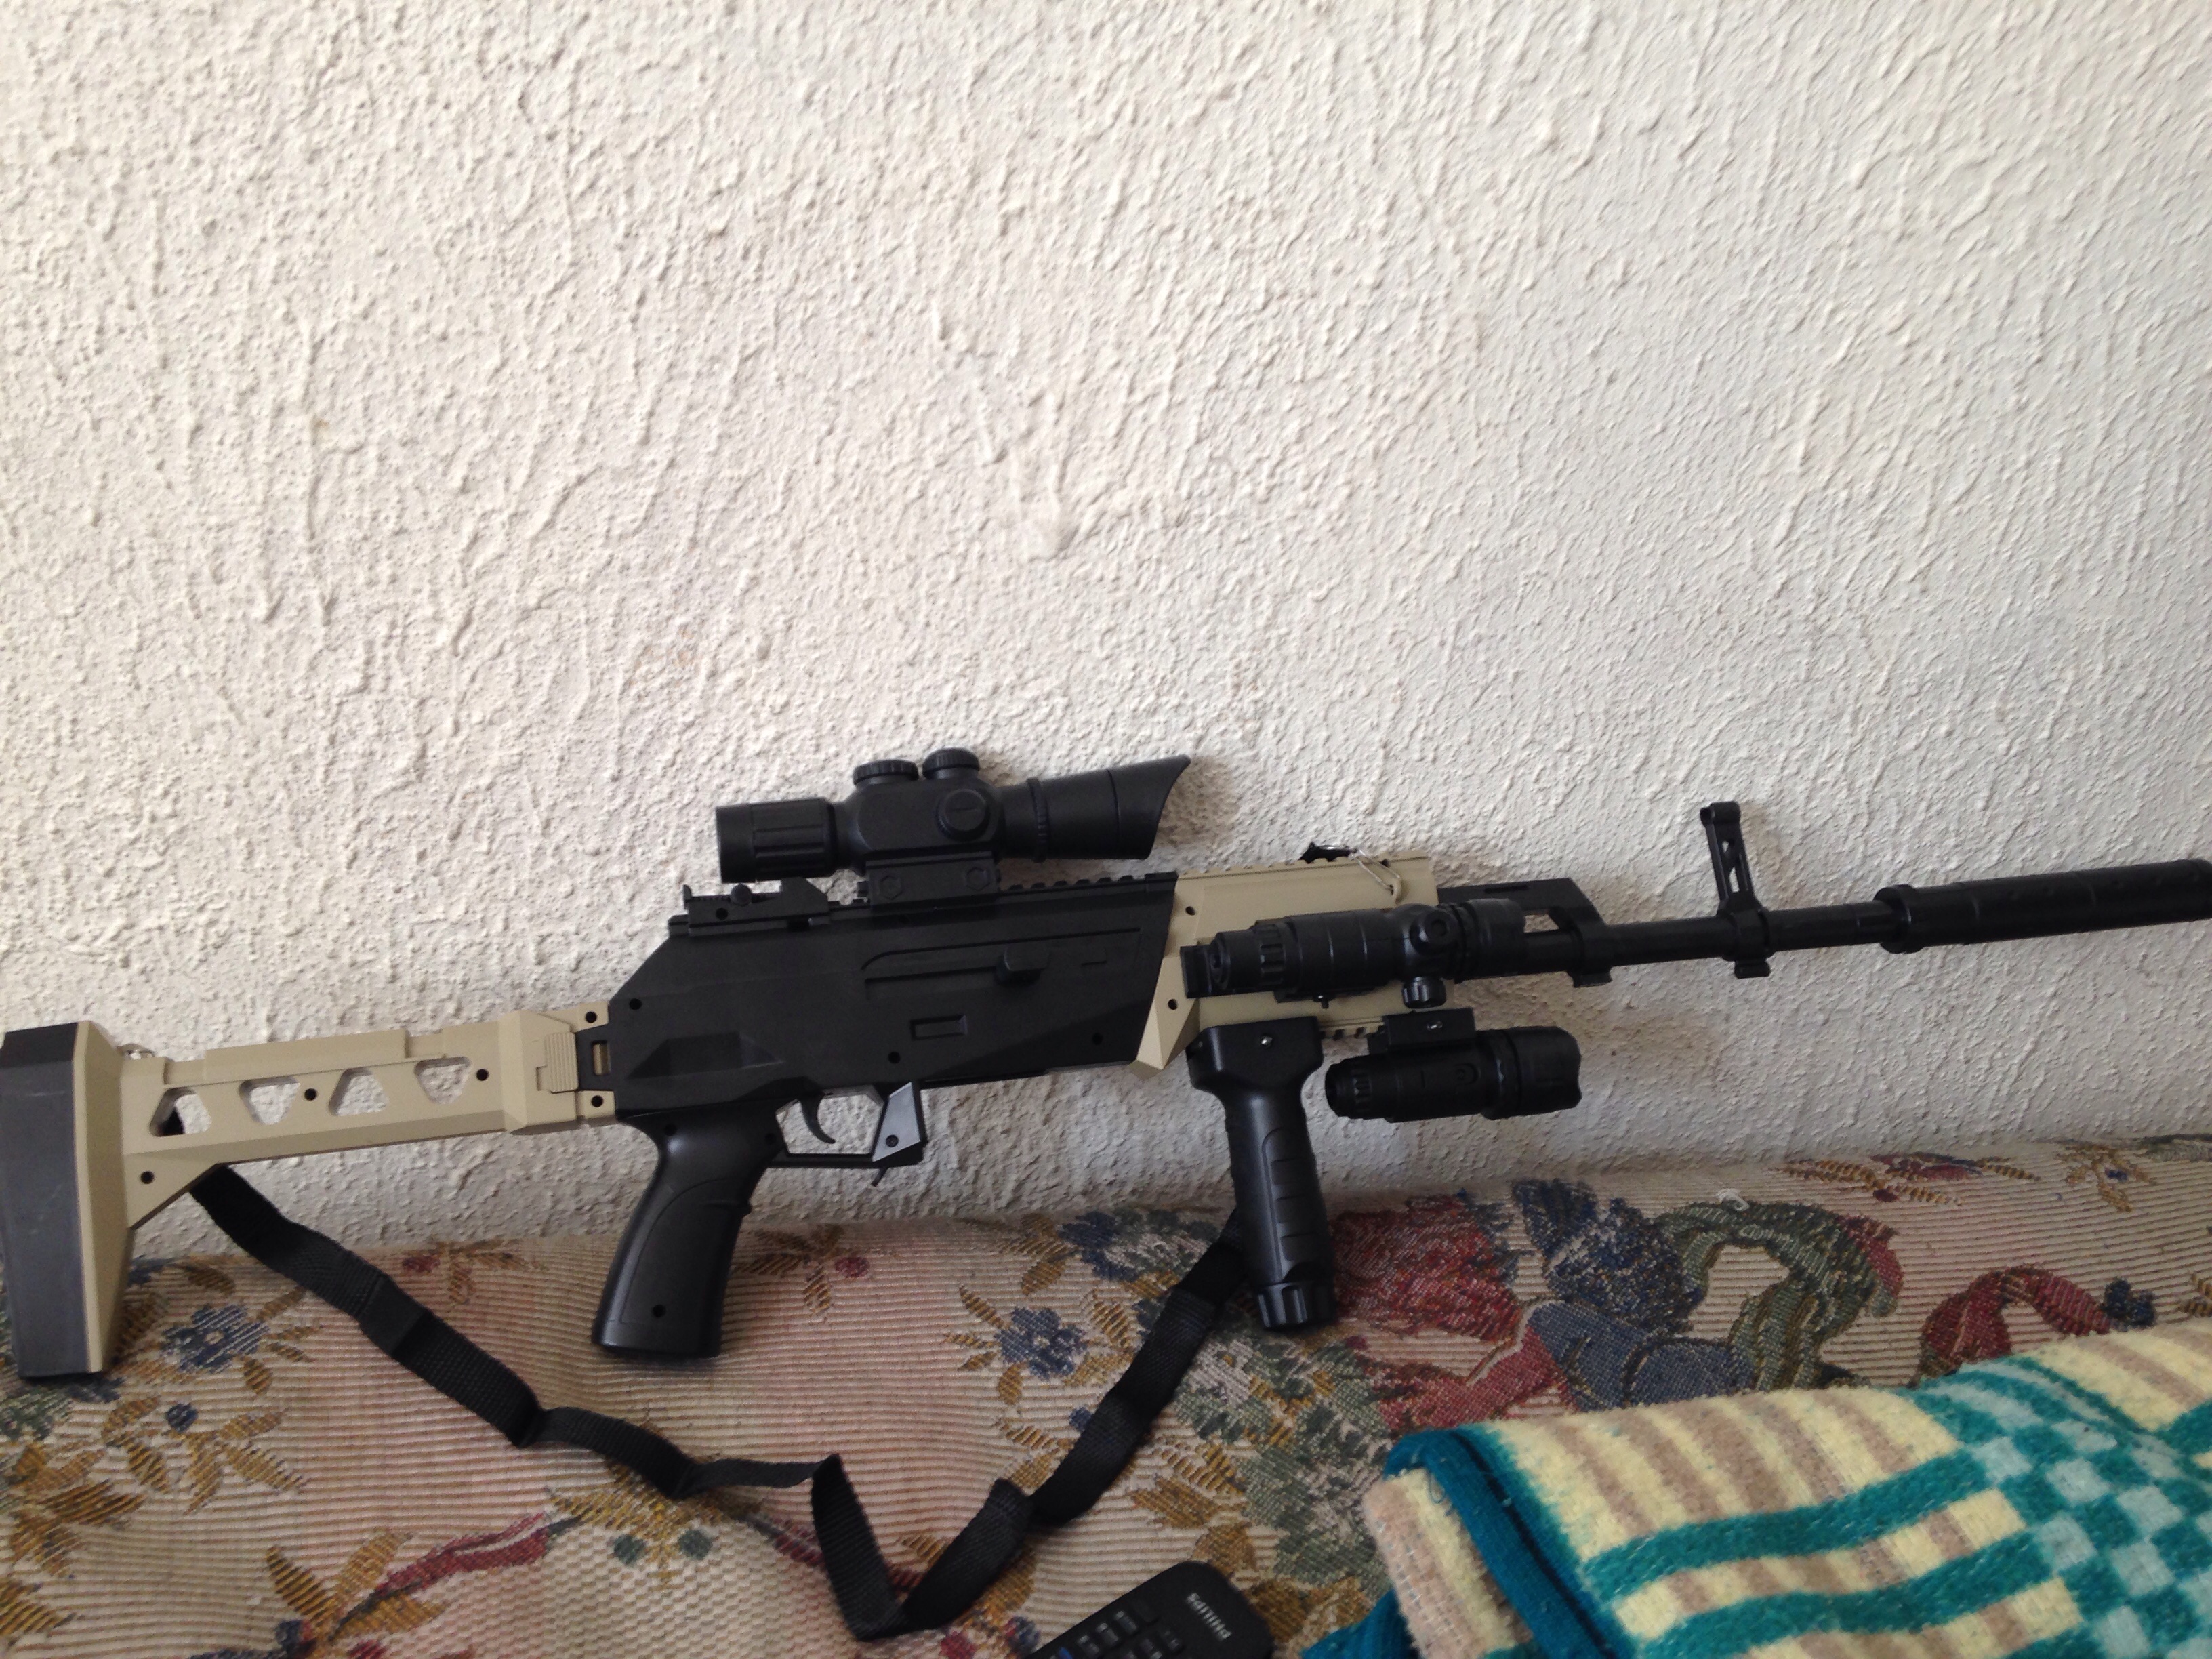 M762 Water Gun Manual Sniper Crystal Live-action outdoor Boy Battle Toy Gun Gift 